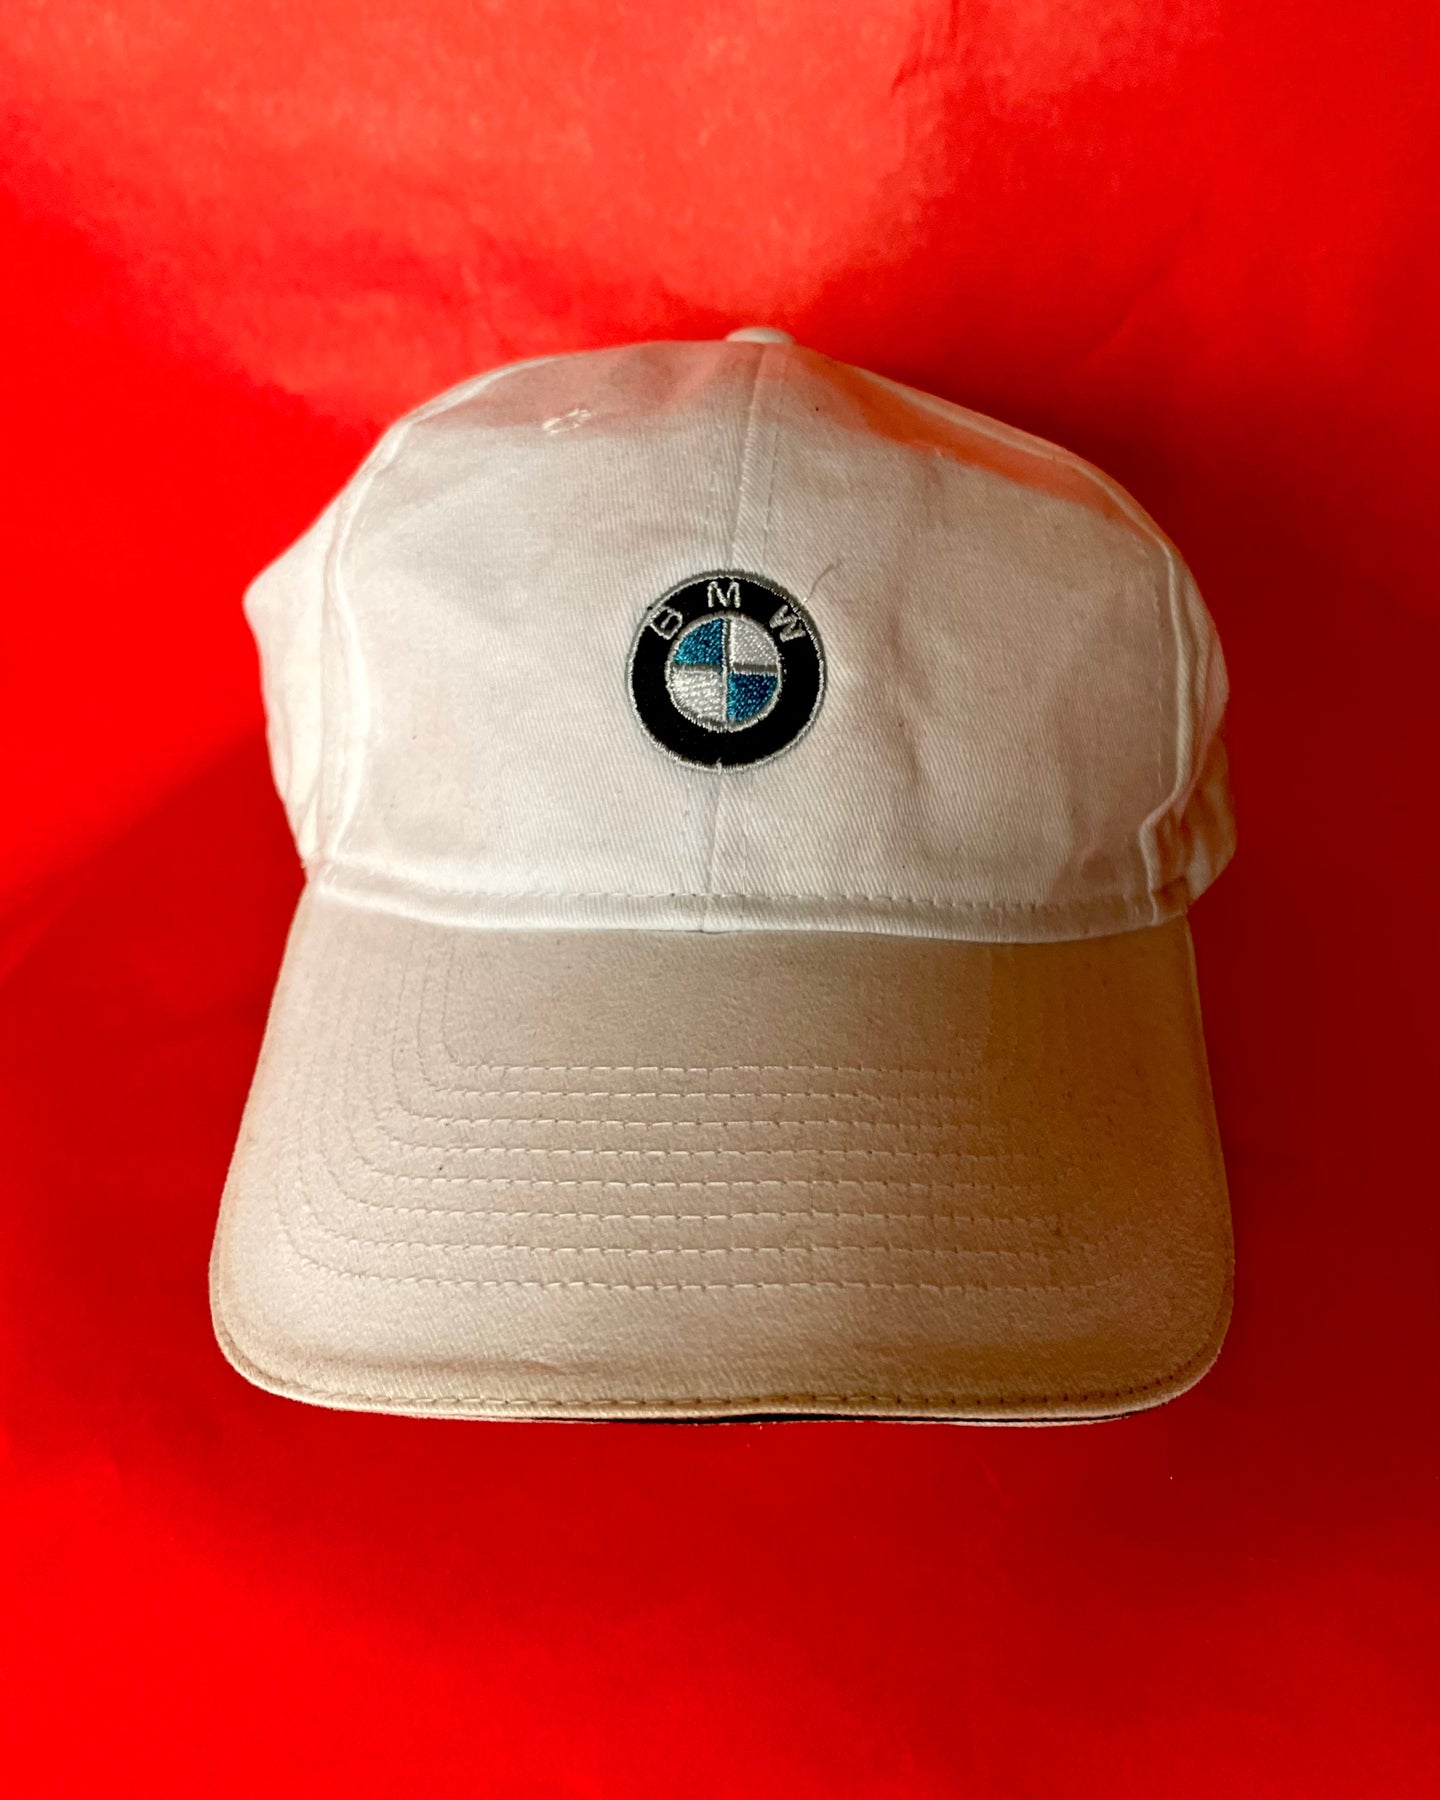 BMW Hat